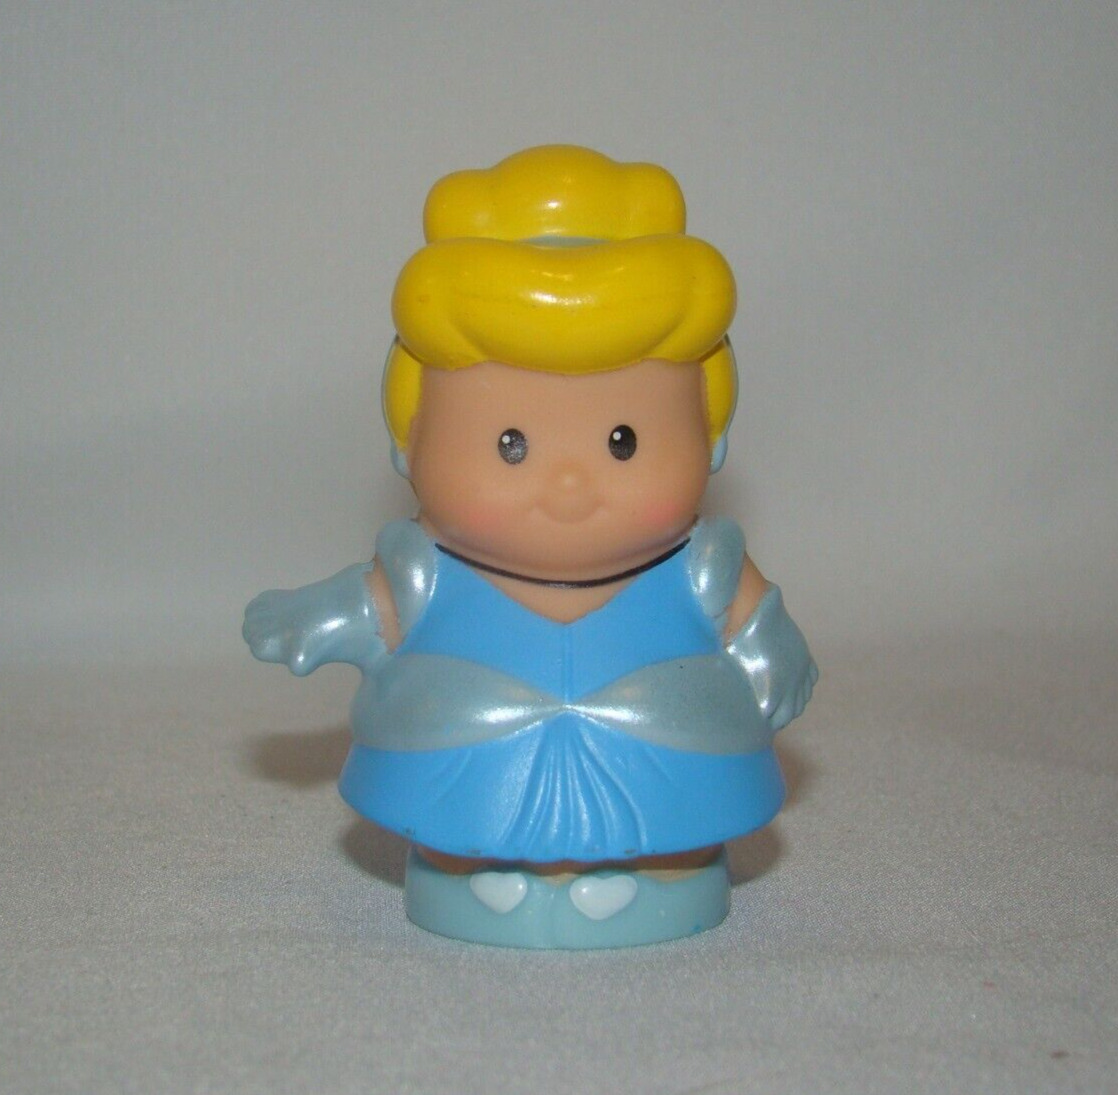 Fisher Price Little People Disney Princess Cinderella, 2012 Mattel